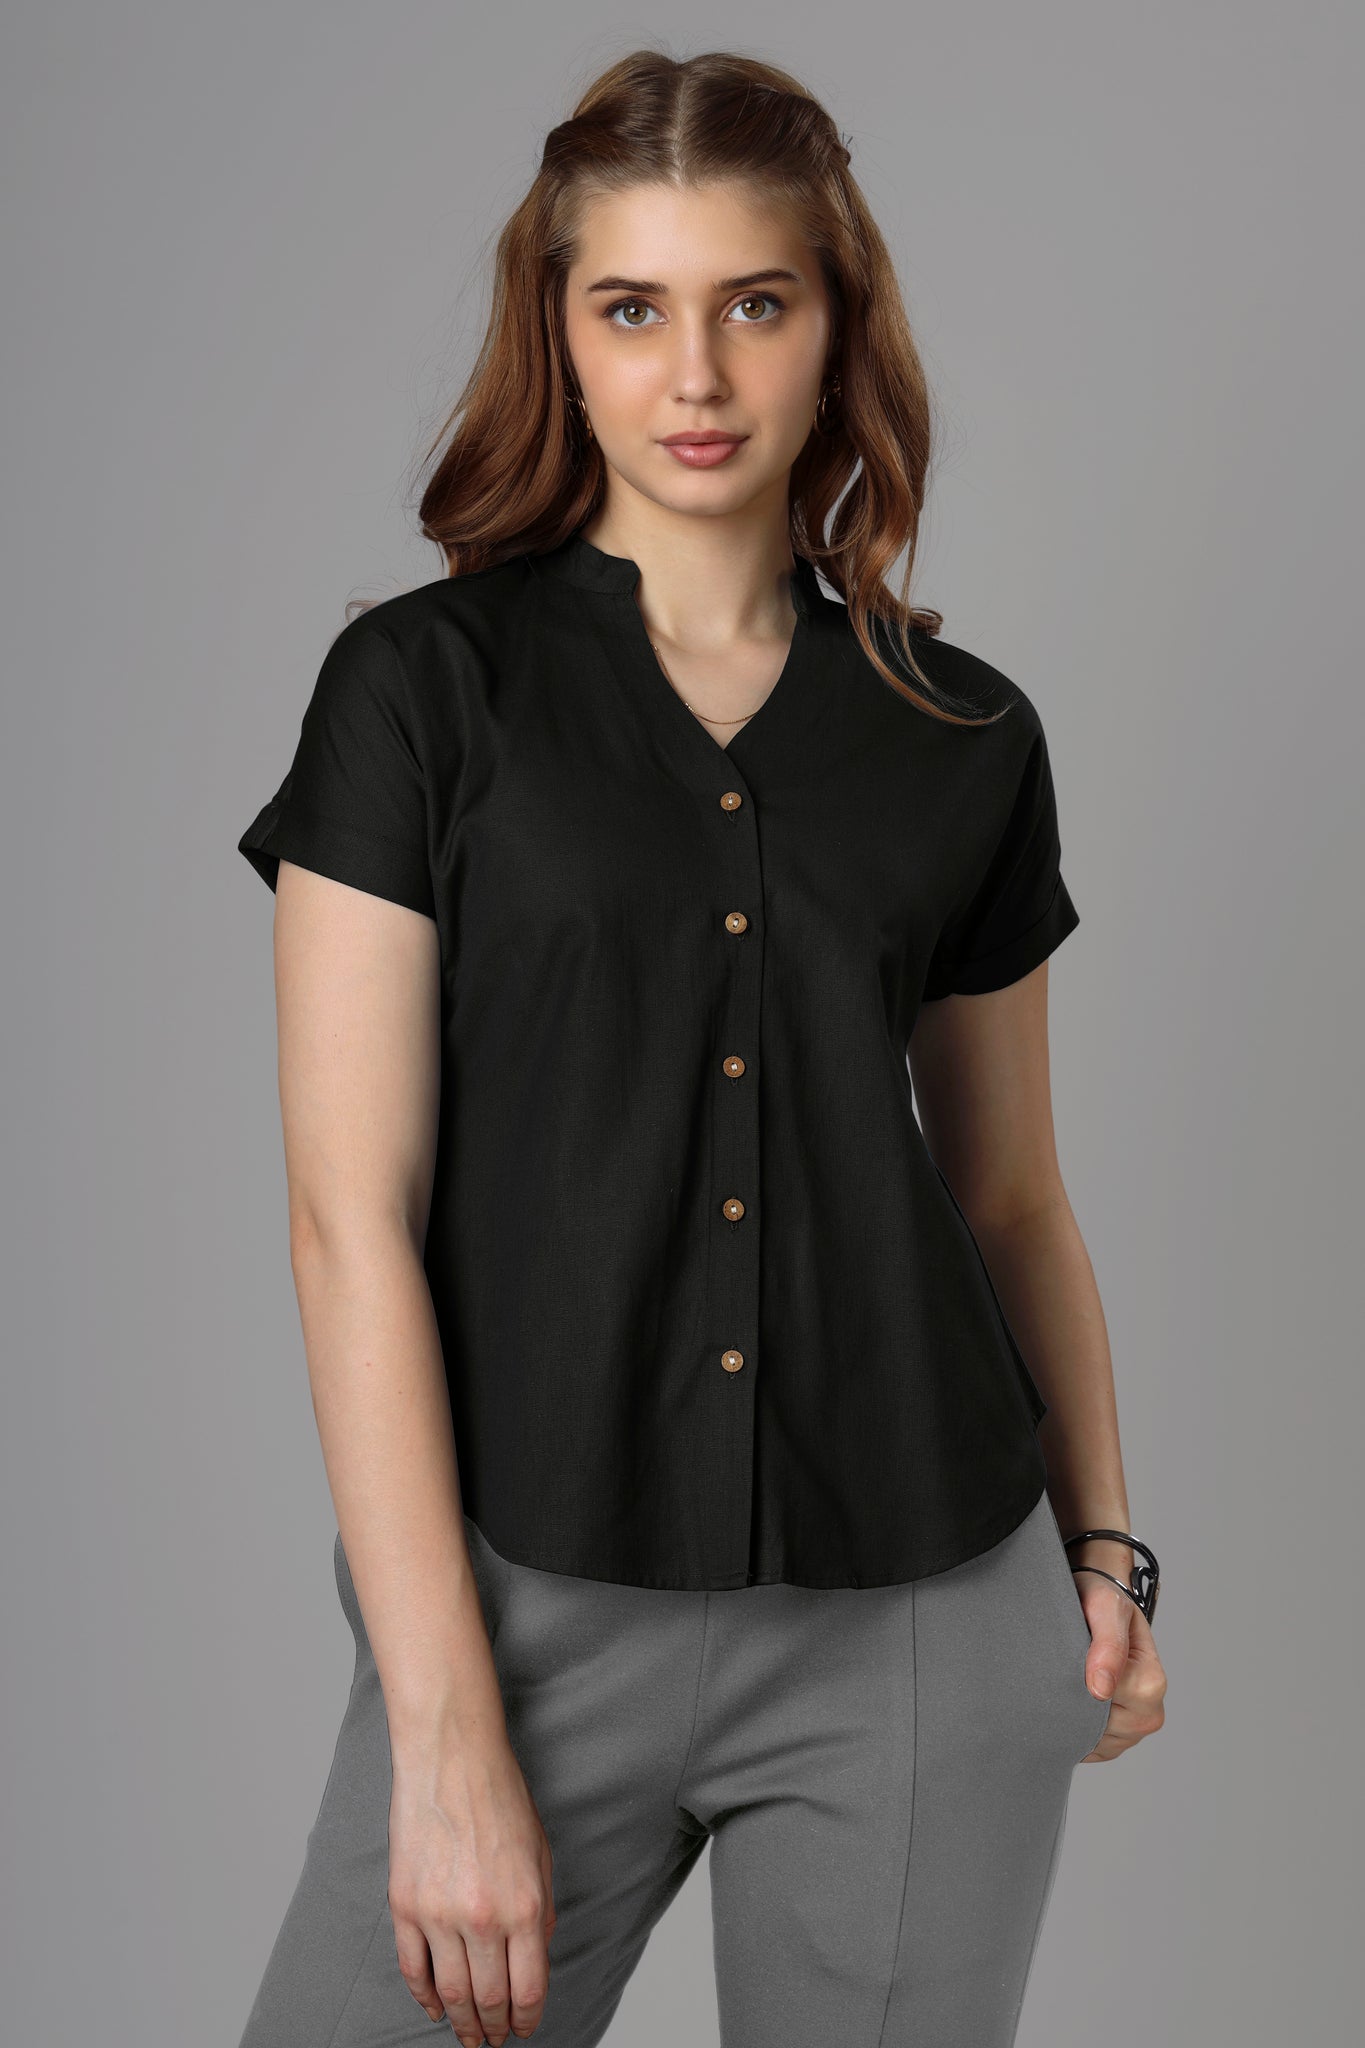 Classic Black Cotton Shirt For Women